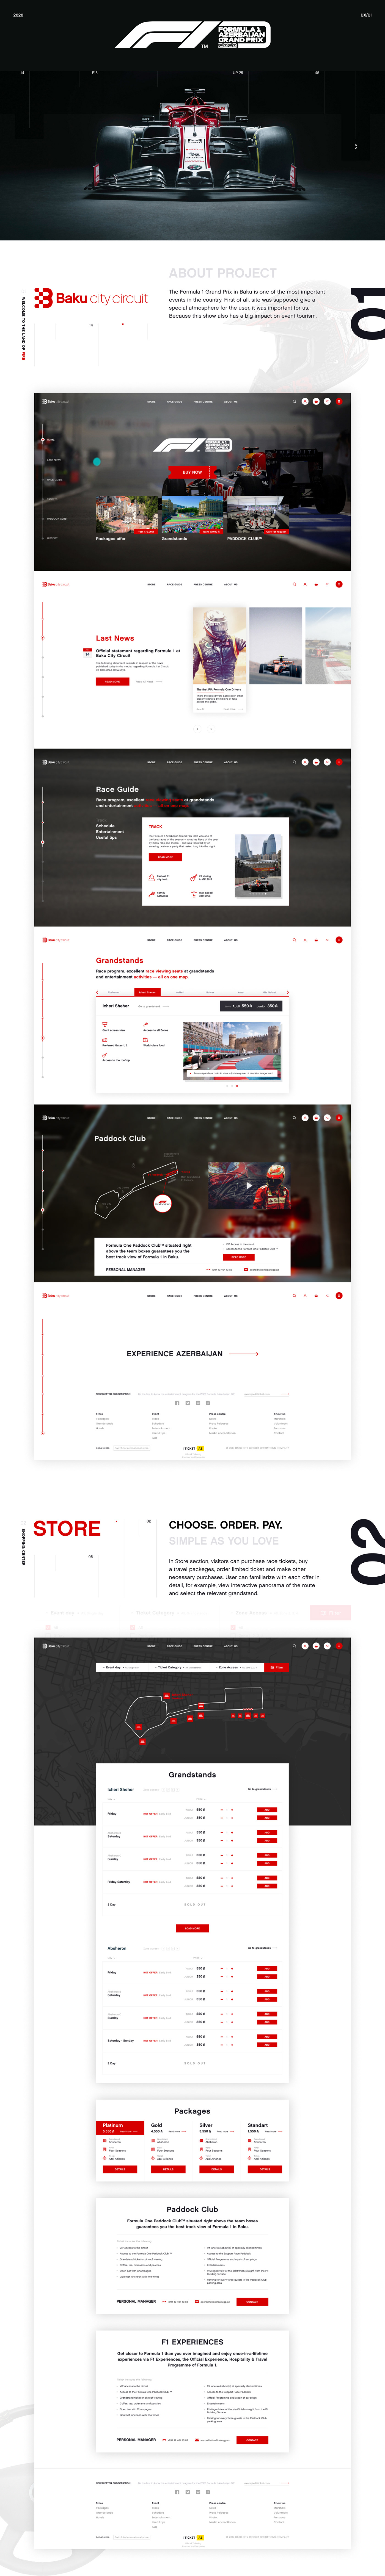 Event Formula 1 Website car Shopping ux UI Web Design  typography   interaction